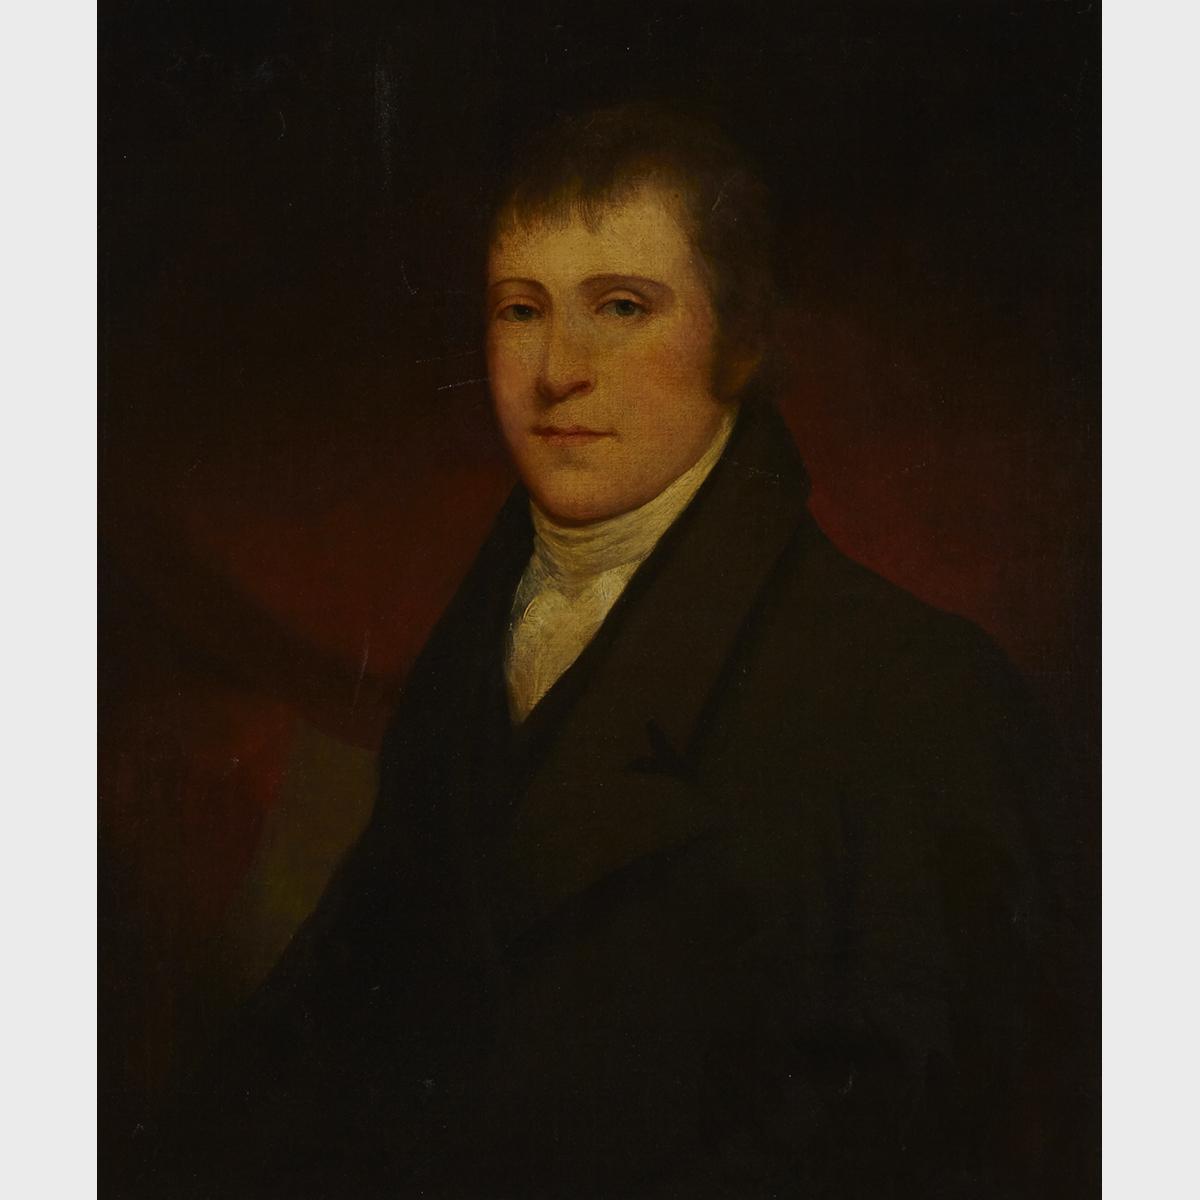 Attributed to Sir Henry Raeburn (1756-1823)